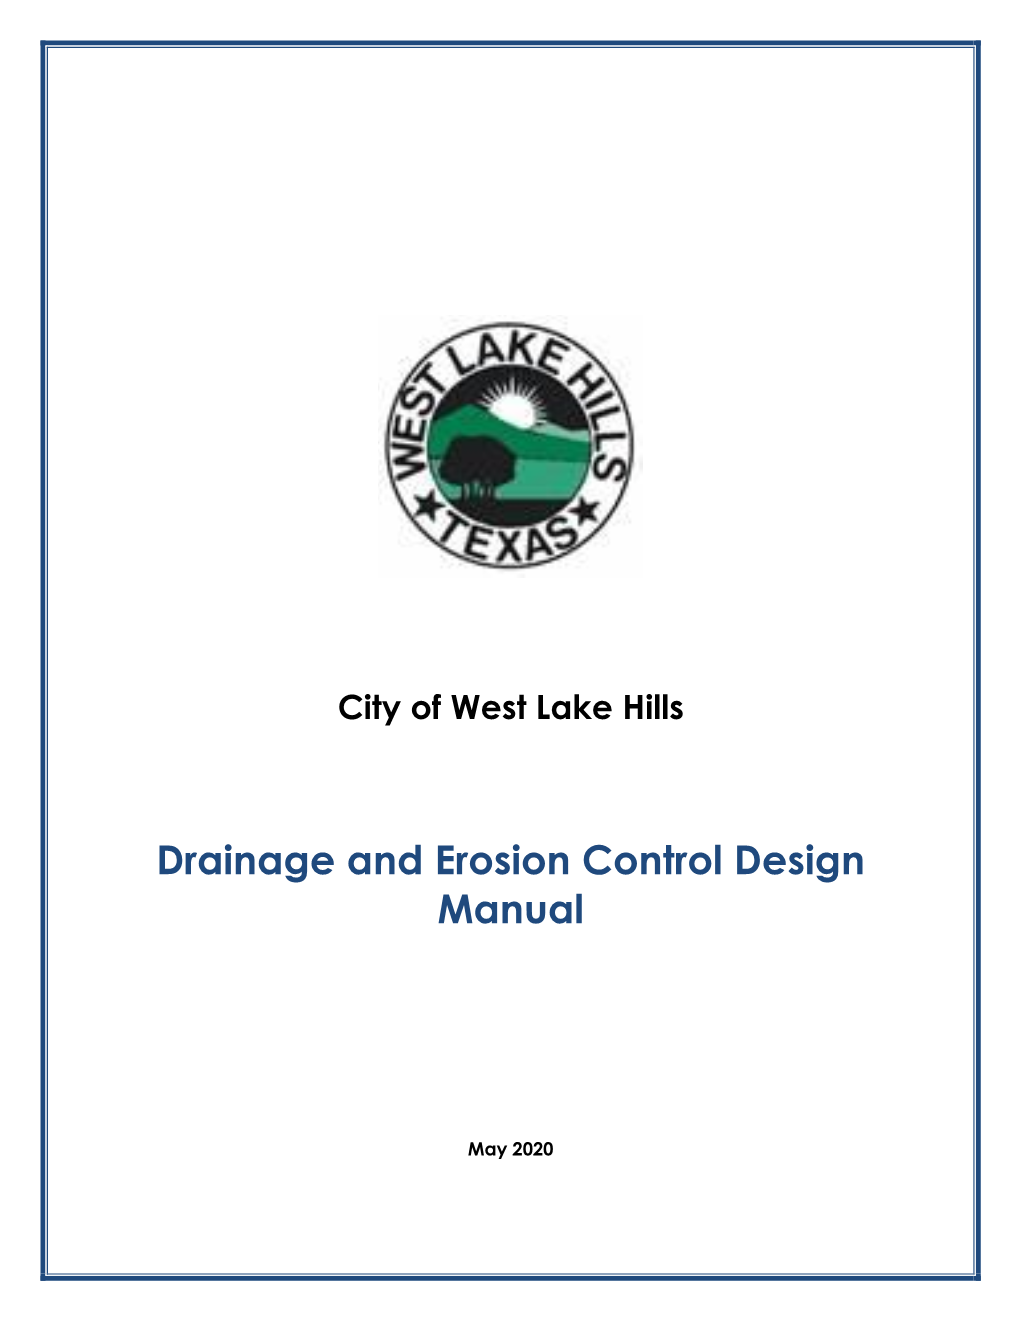 Drainage and Erosion Control Design Manual